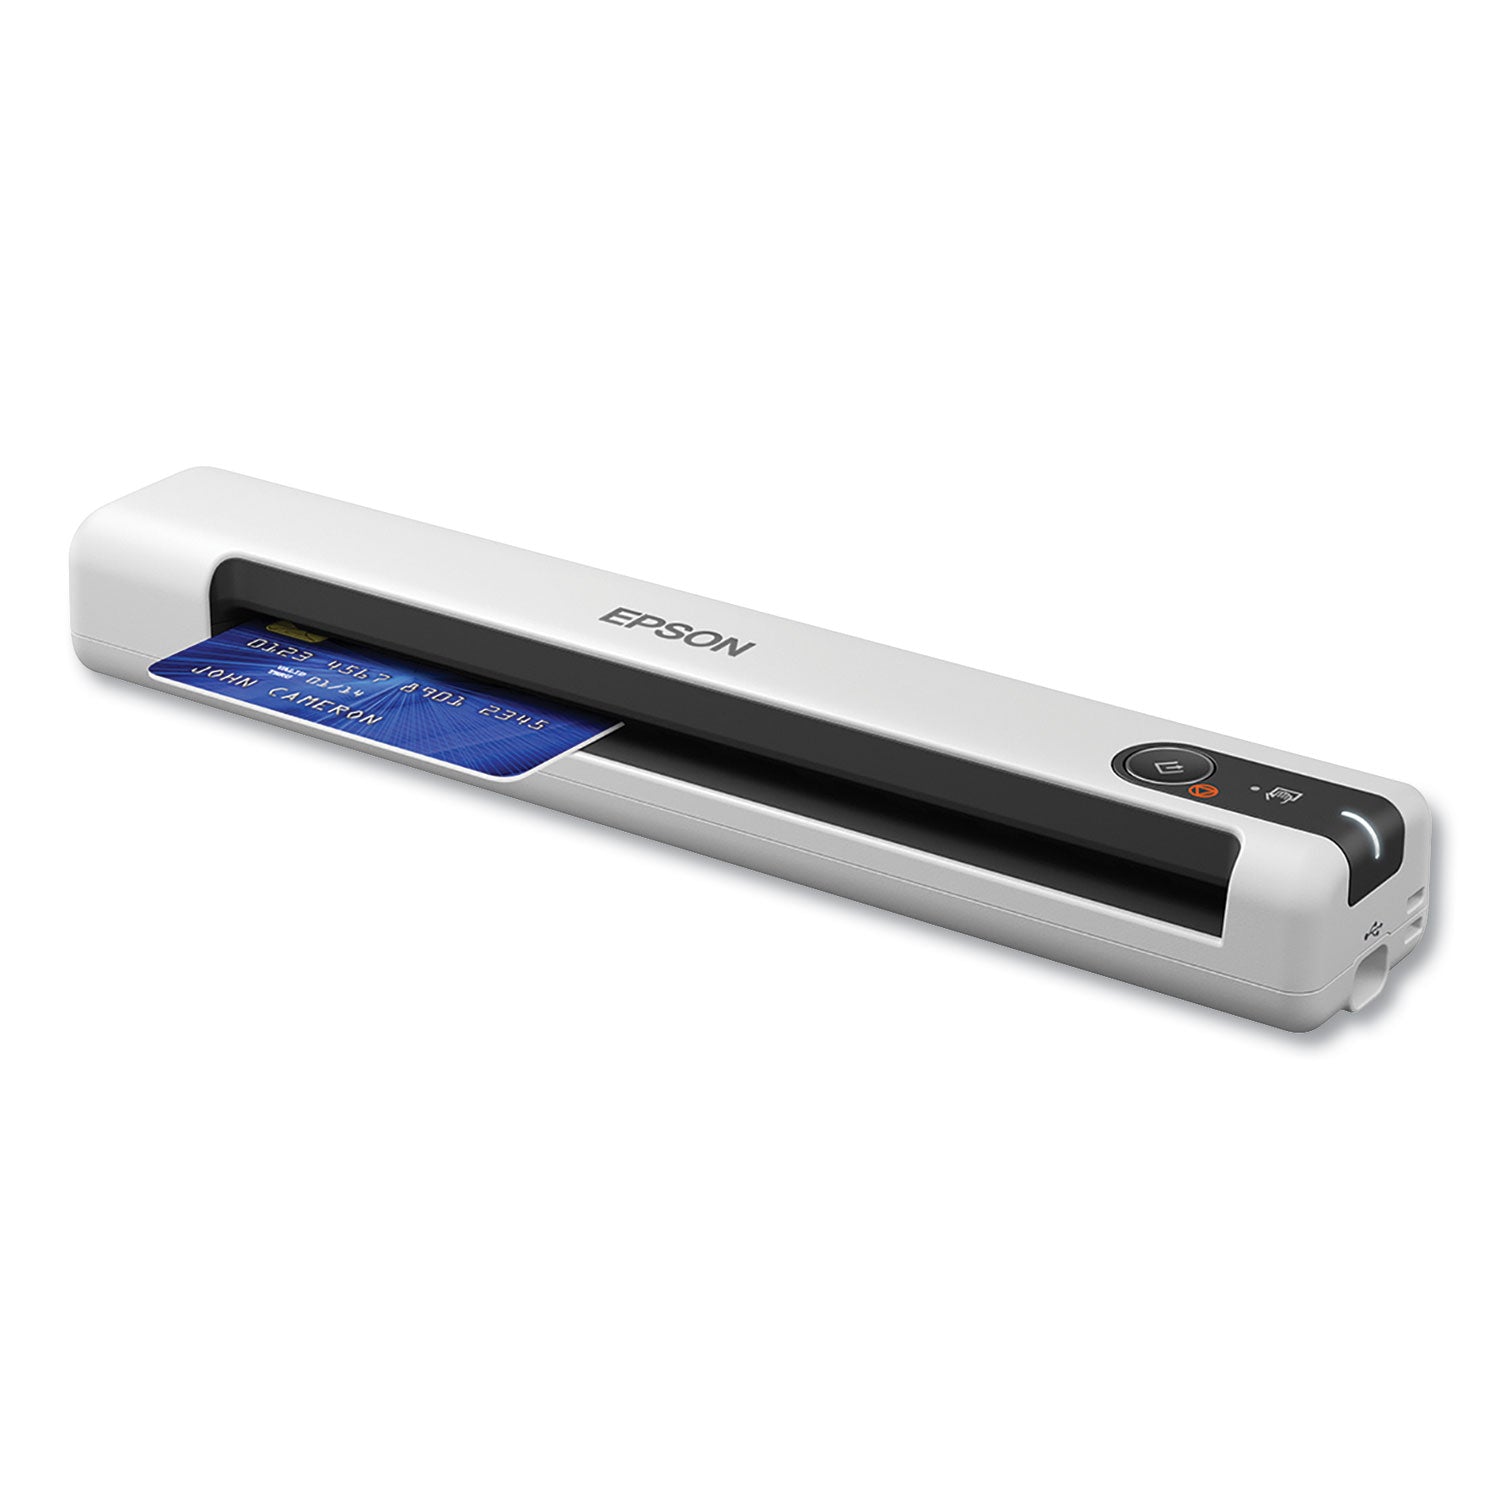 ds-70-portable-document-scanner-600-dpi-optical-resolution-1-sheet-auto-document-feeder_epsb11b252202 - 4